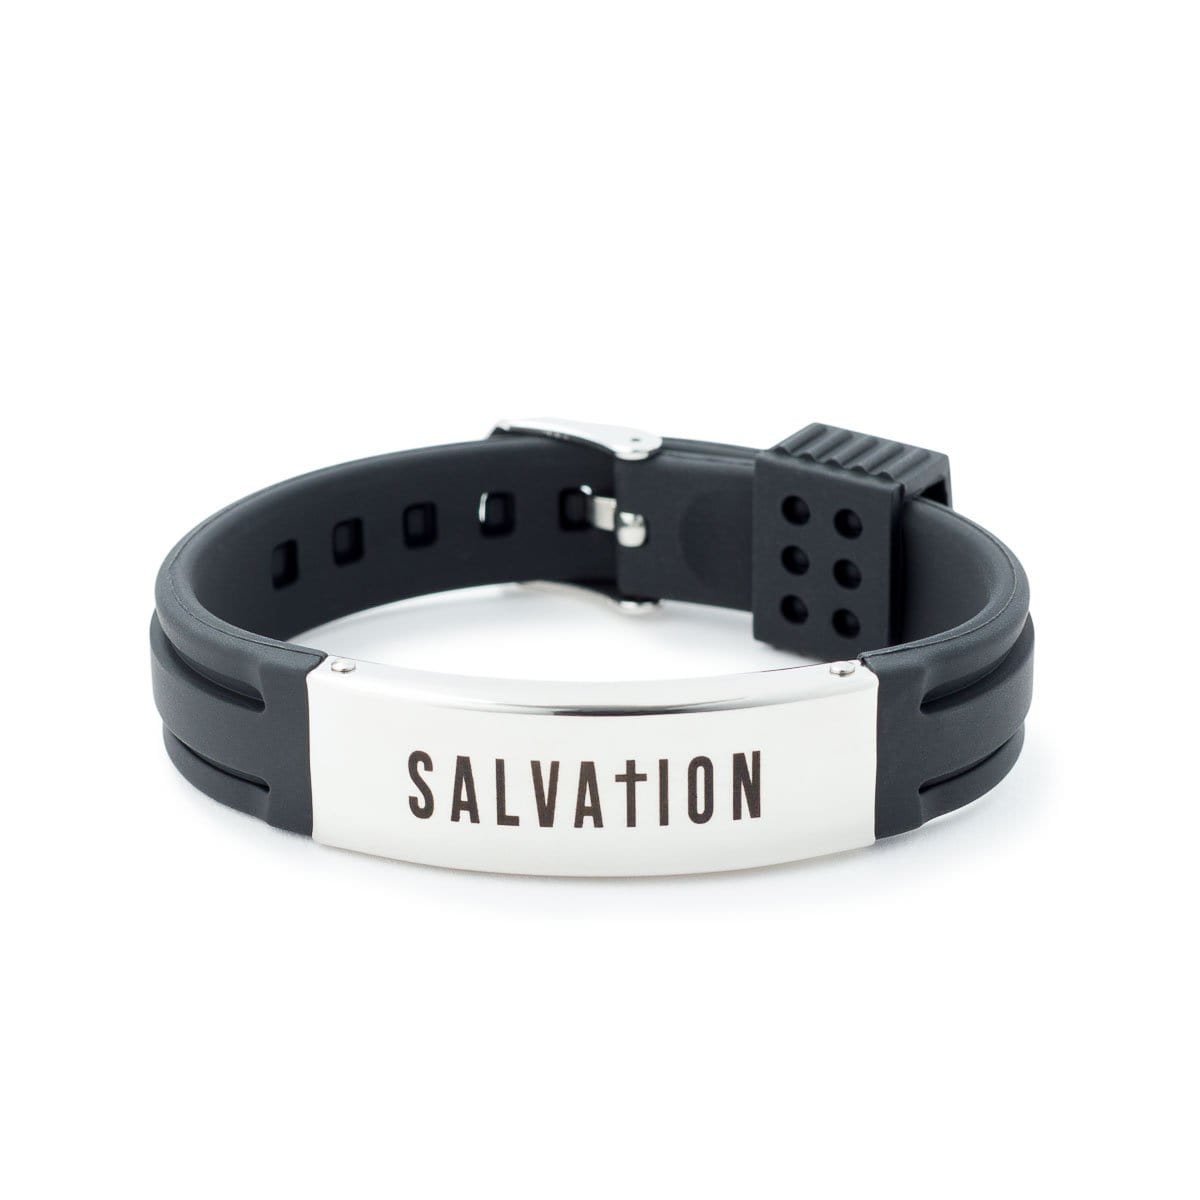 Salvation Rubber Bracelet